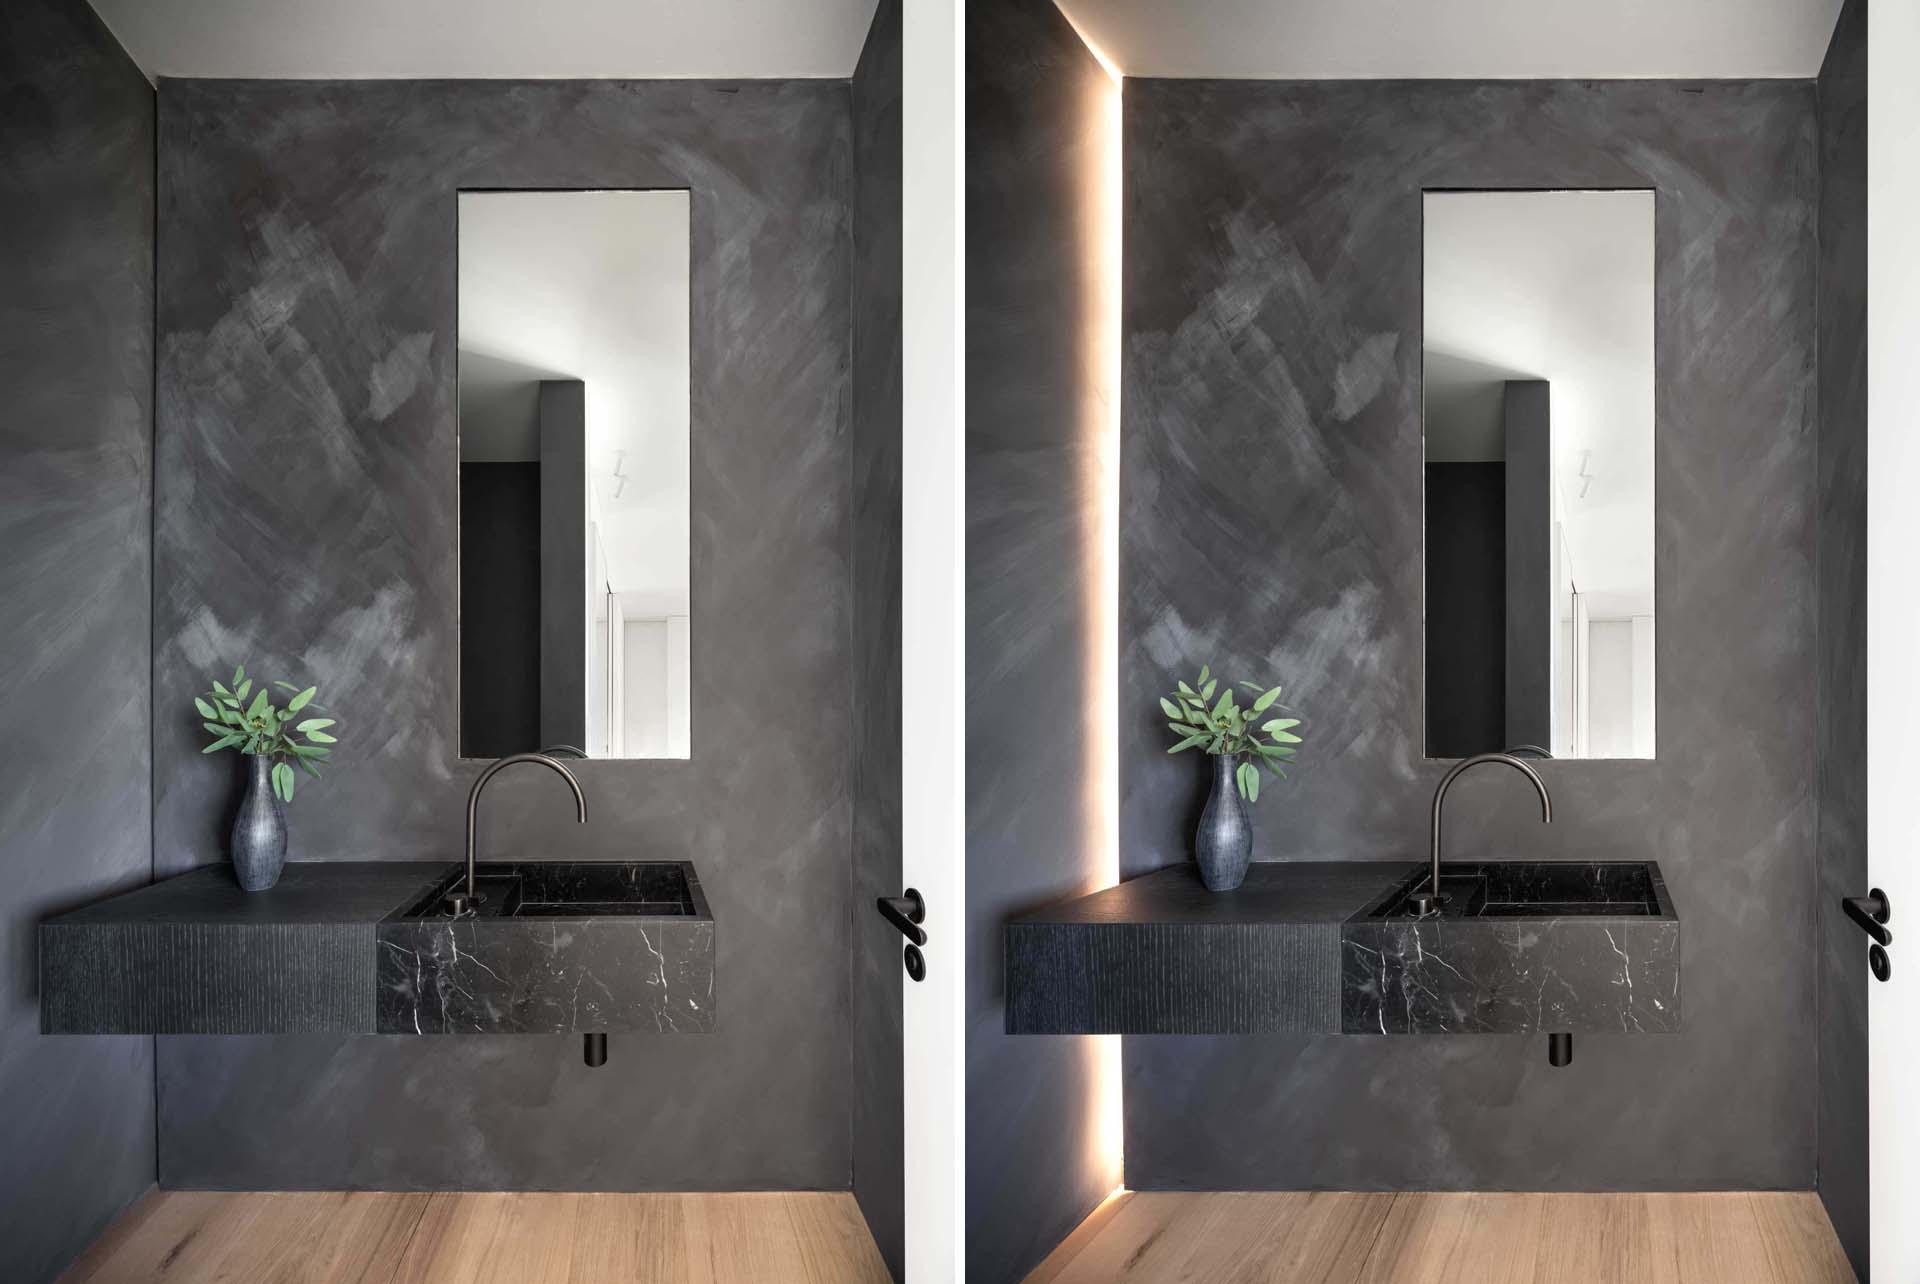 A modern bathroom with a dark accent wall and hidden lighting.